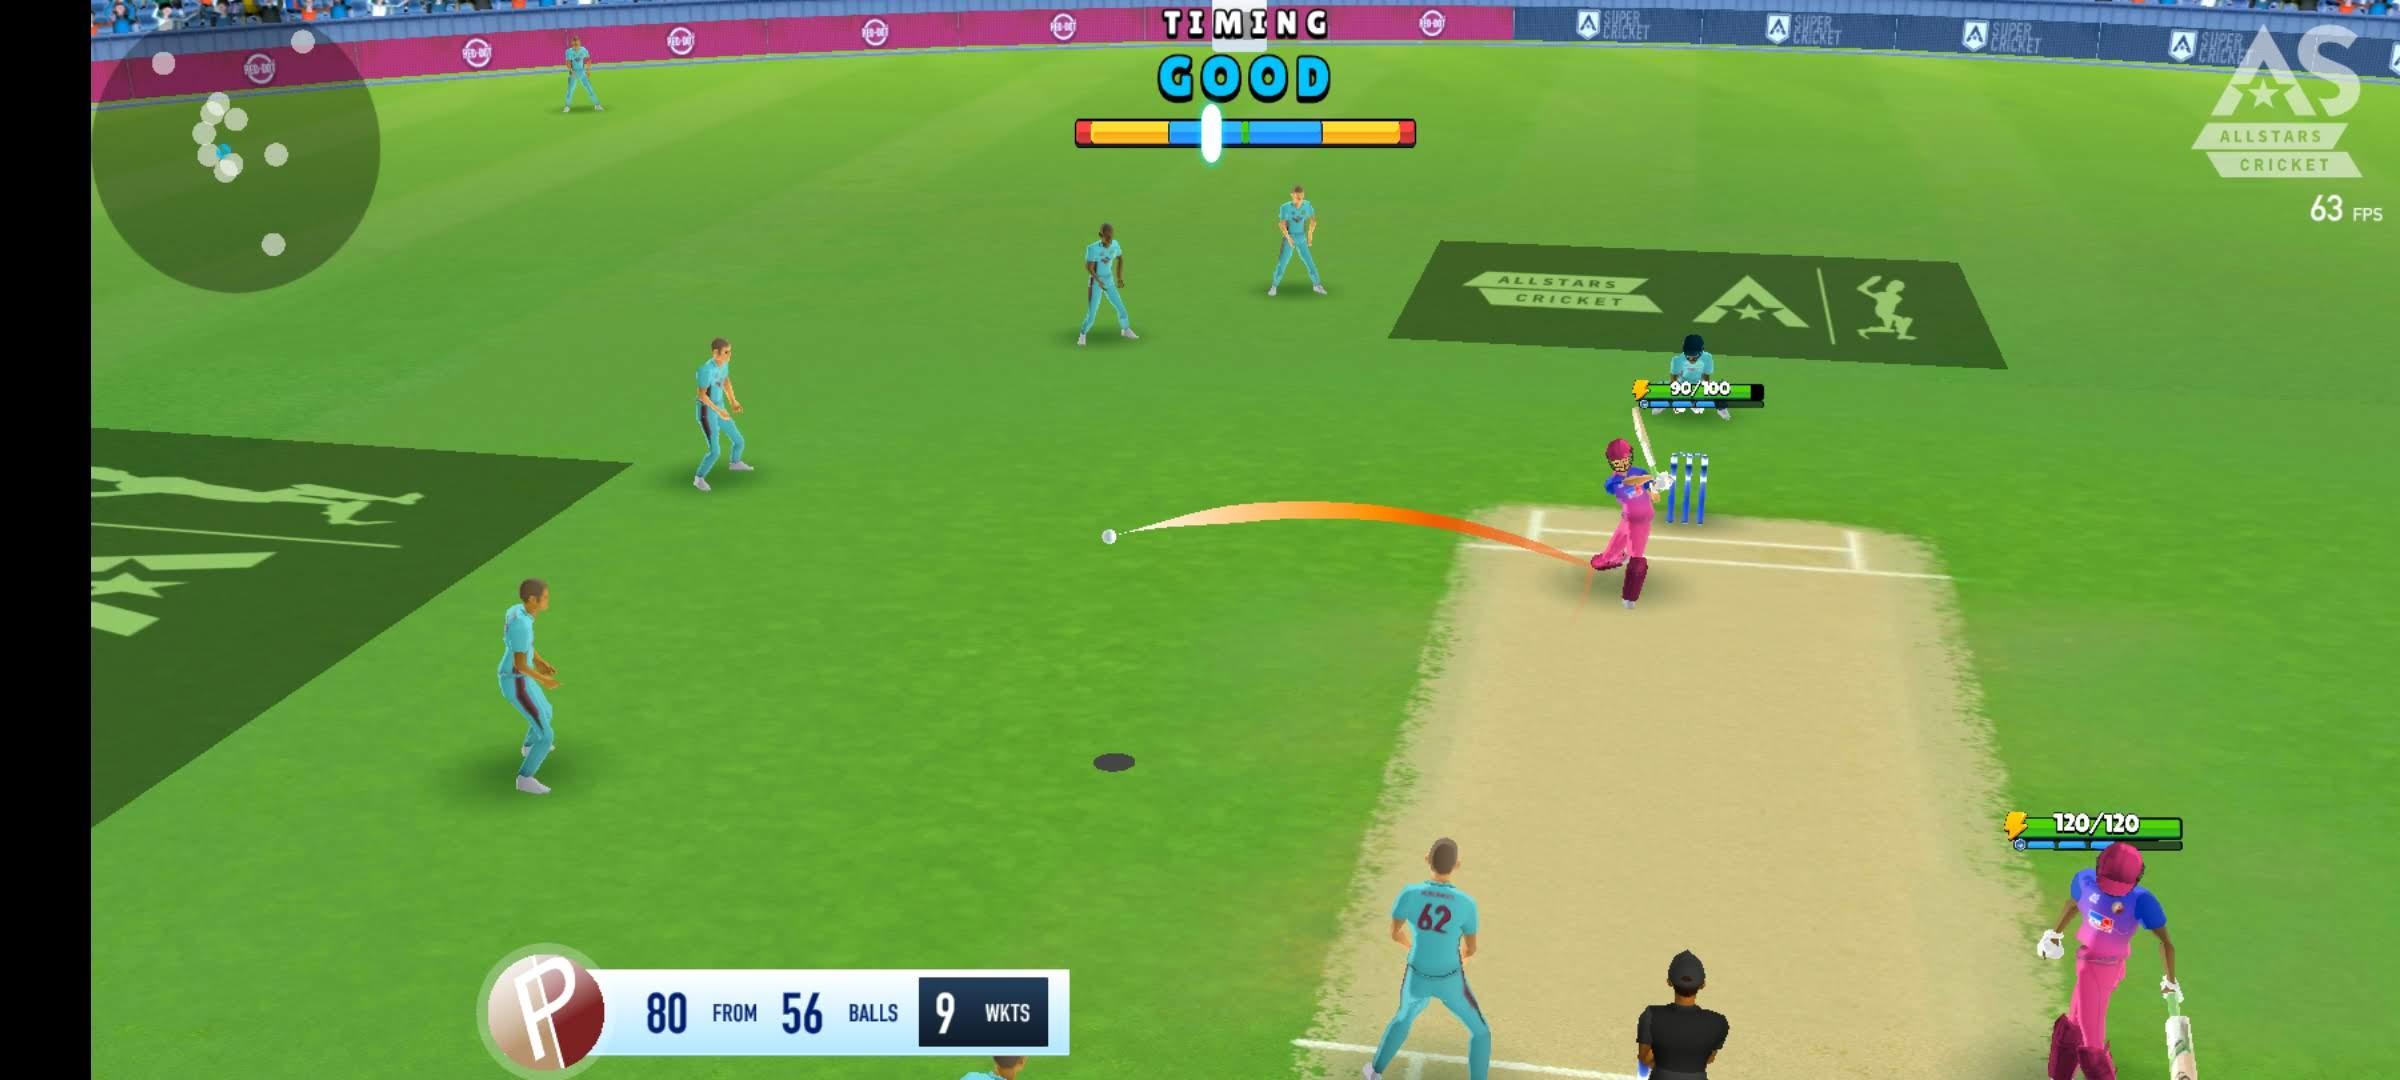 All Stars Cricket - Premier League Ultimate Team 0.0.1.857 Screenshot 1